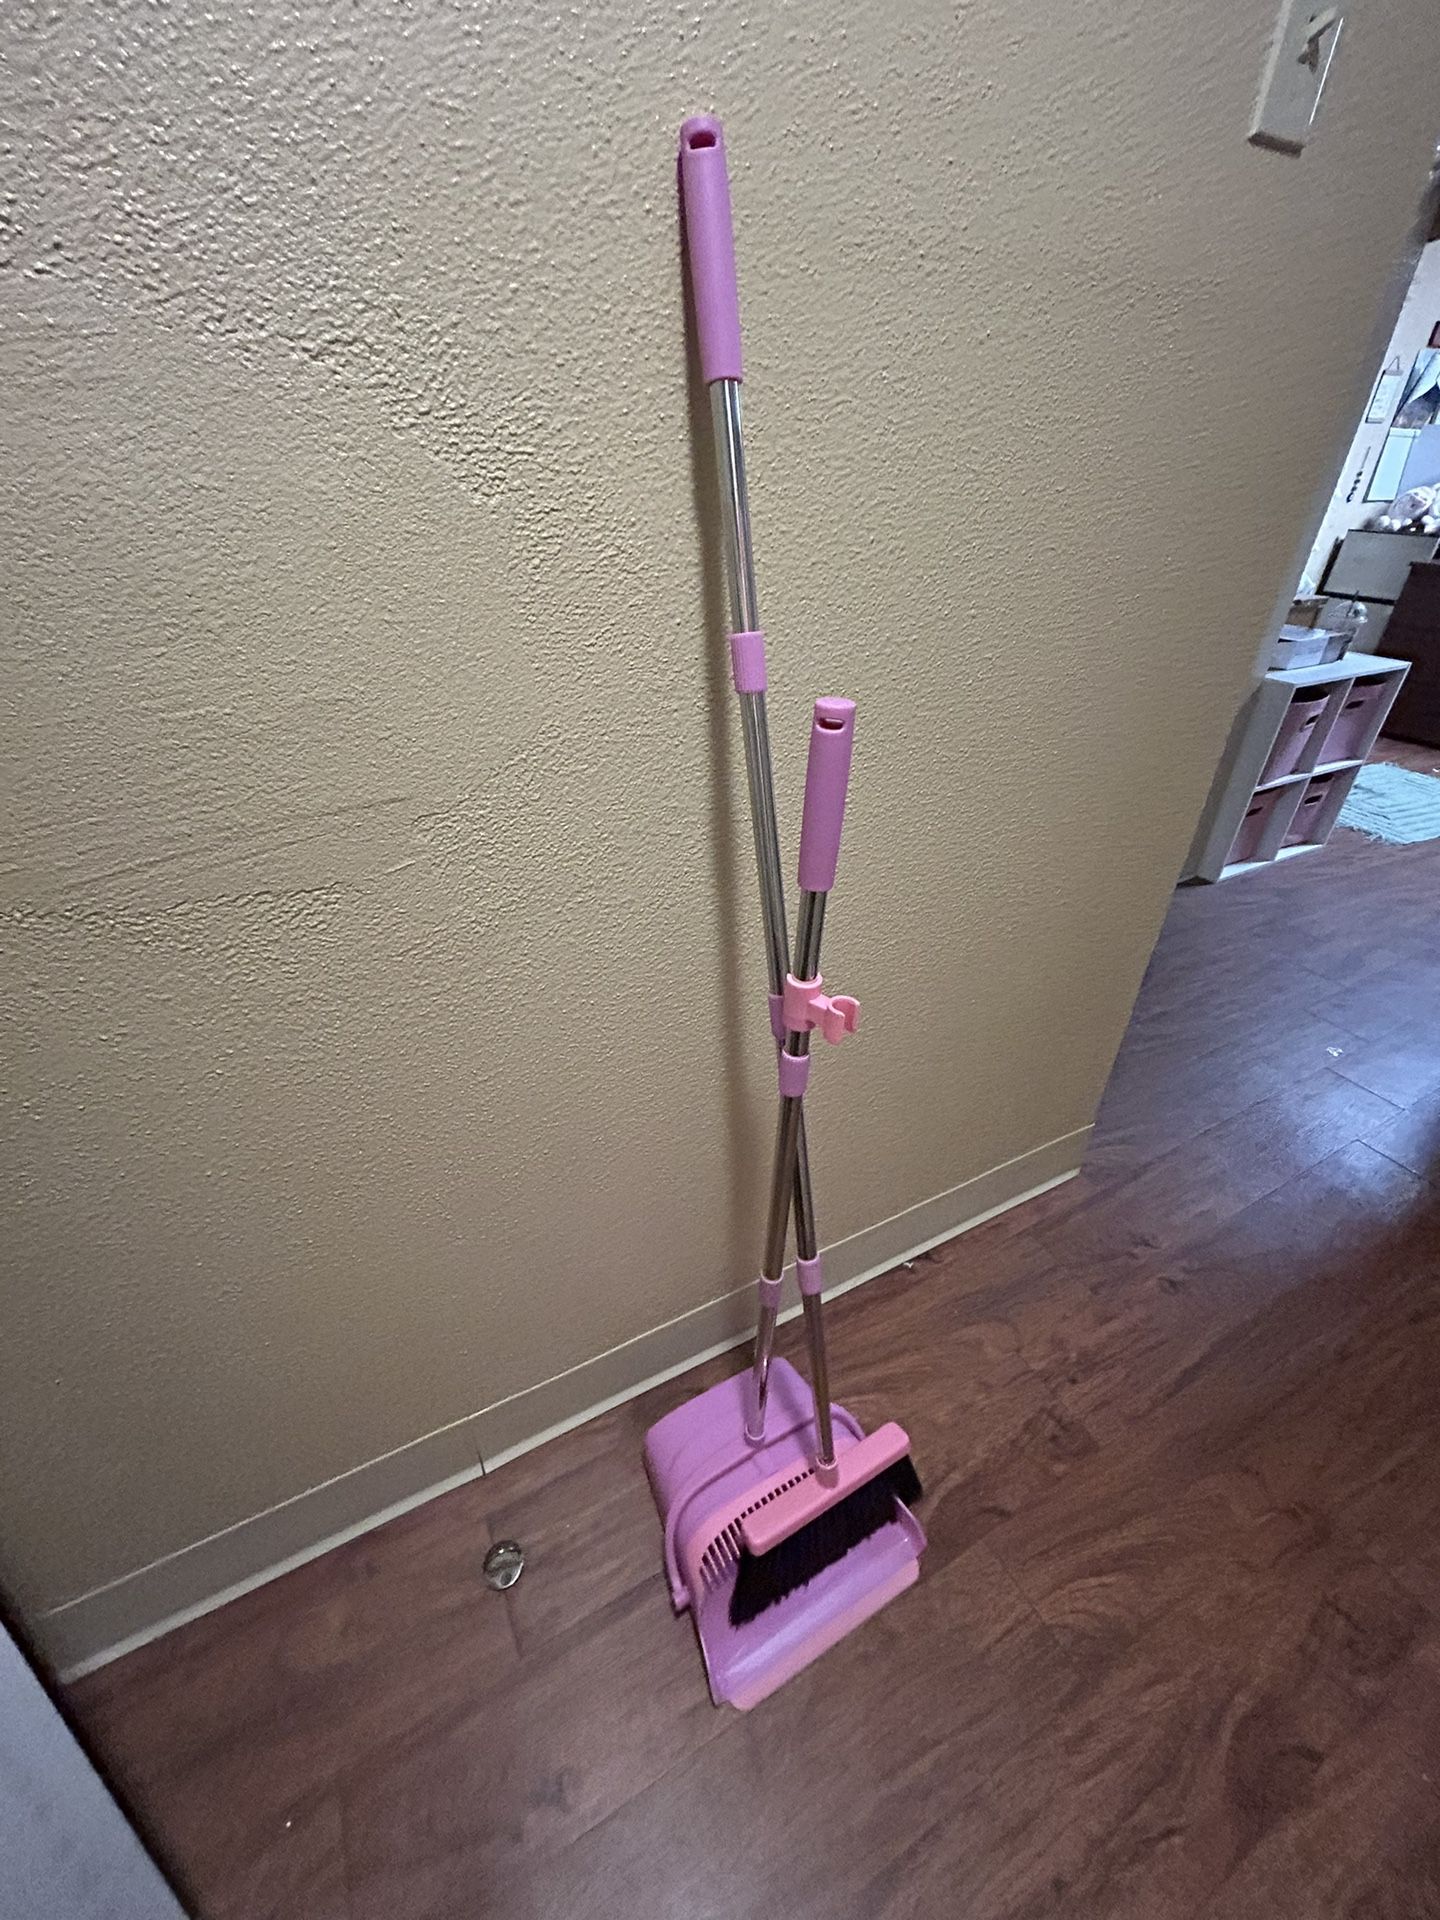 Pink Dust Pan And Broom Set $20 